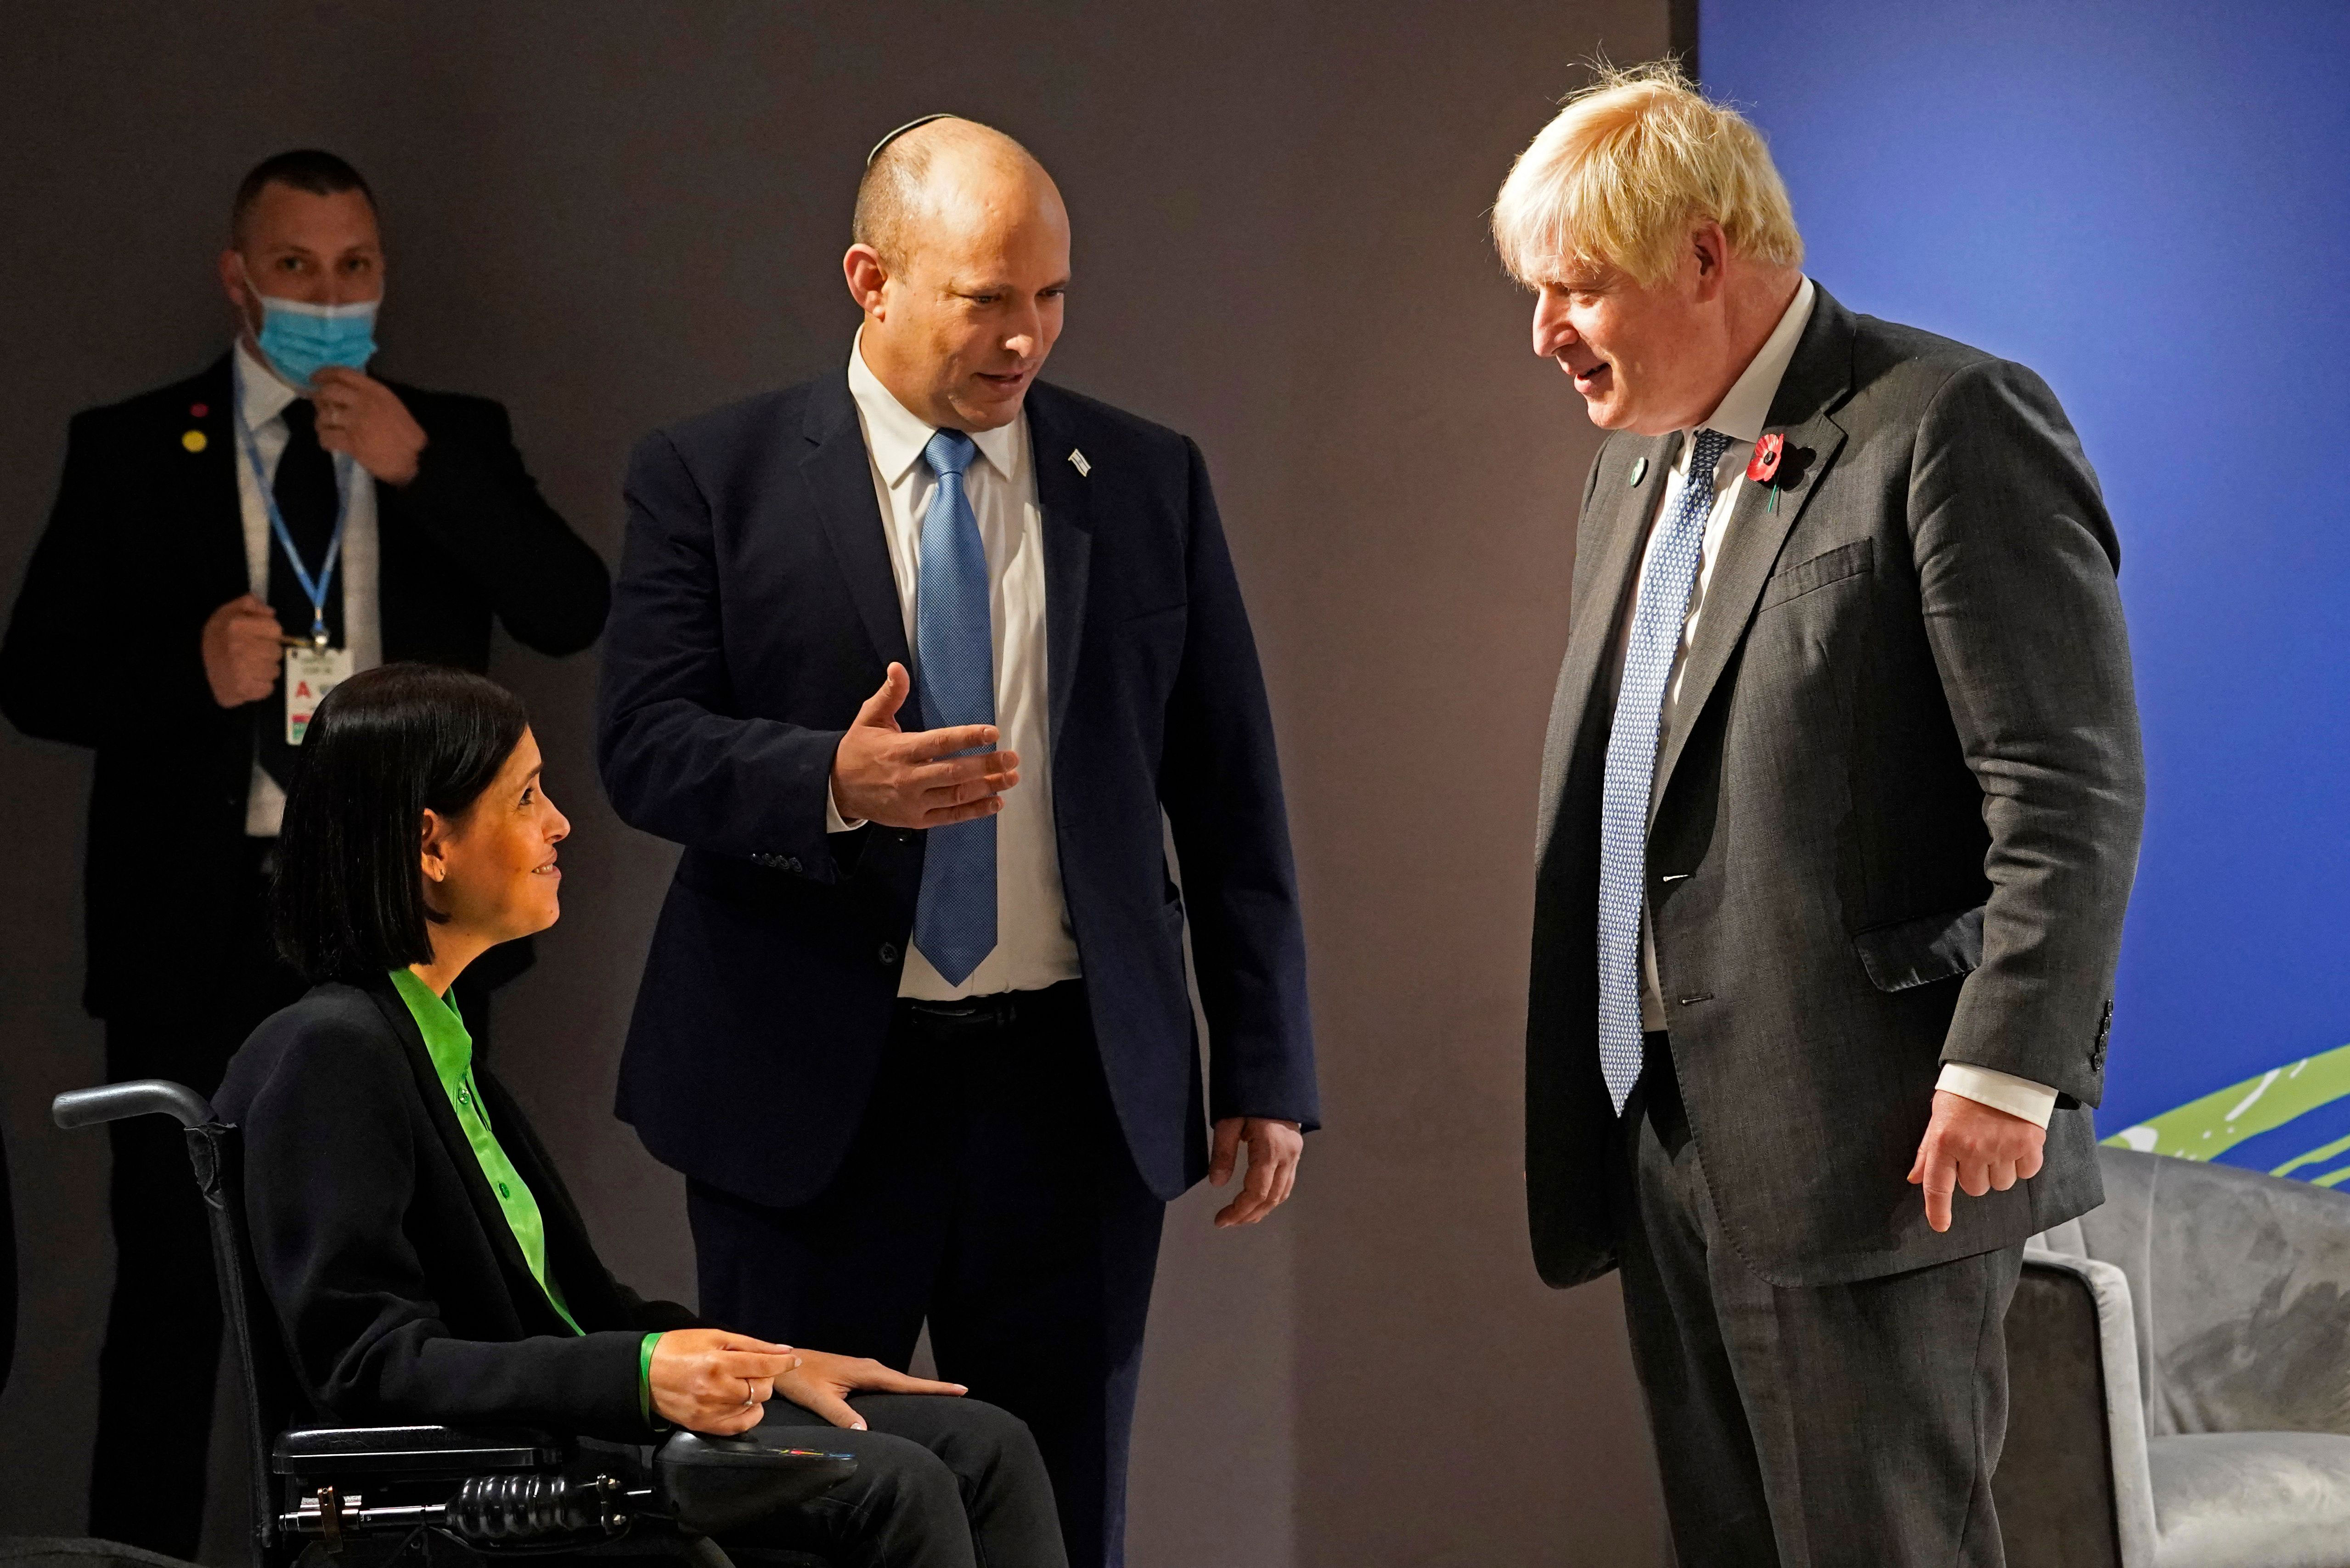 UK Prime Minister Boris Johnson, right, is introduced to Israel's Energy Minister Karine Elharrar during a meeting with Israel's Prime Minister Naftali Bennett, center, on the sidelines of COP26 in Glasgow, Scotland, on November 2.